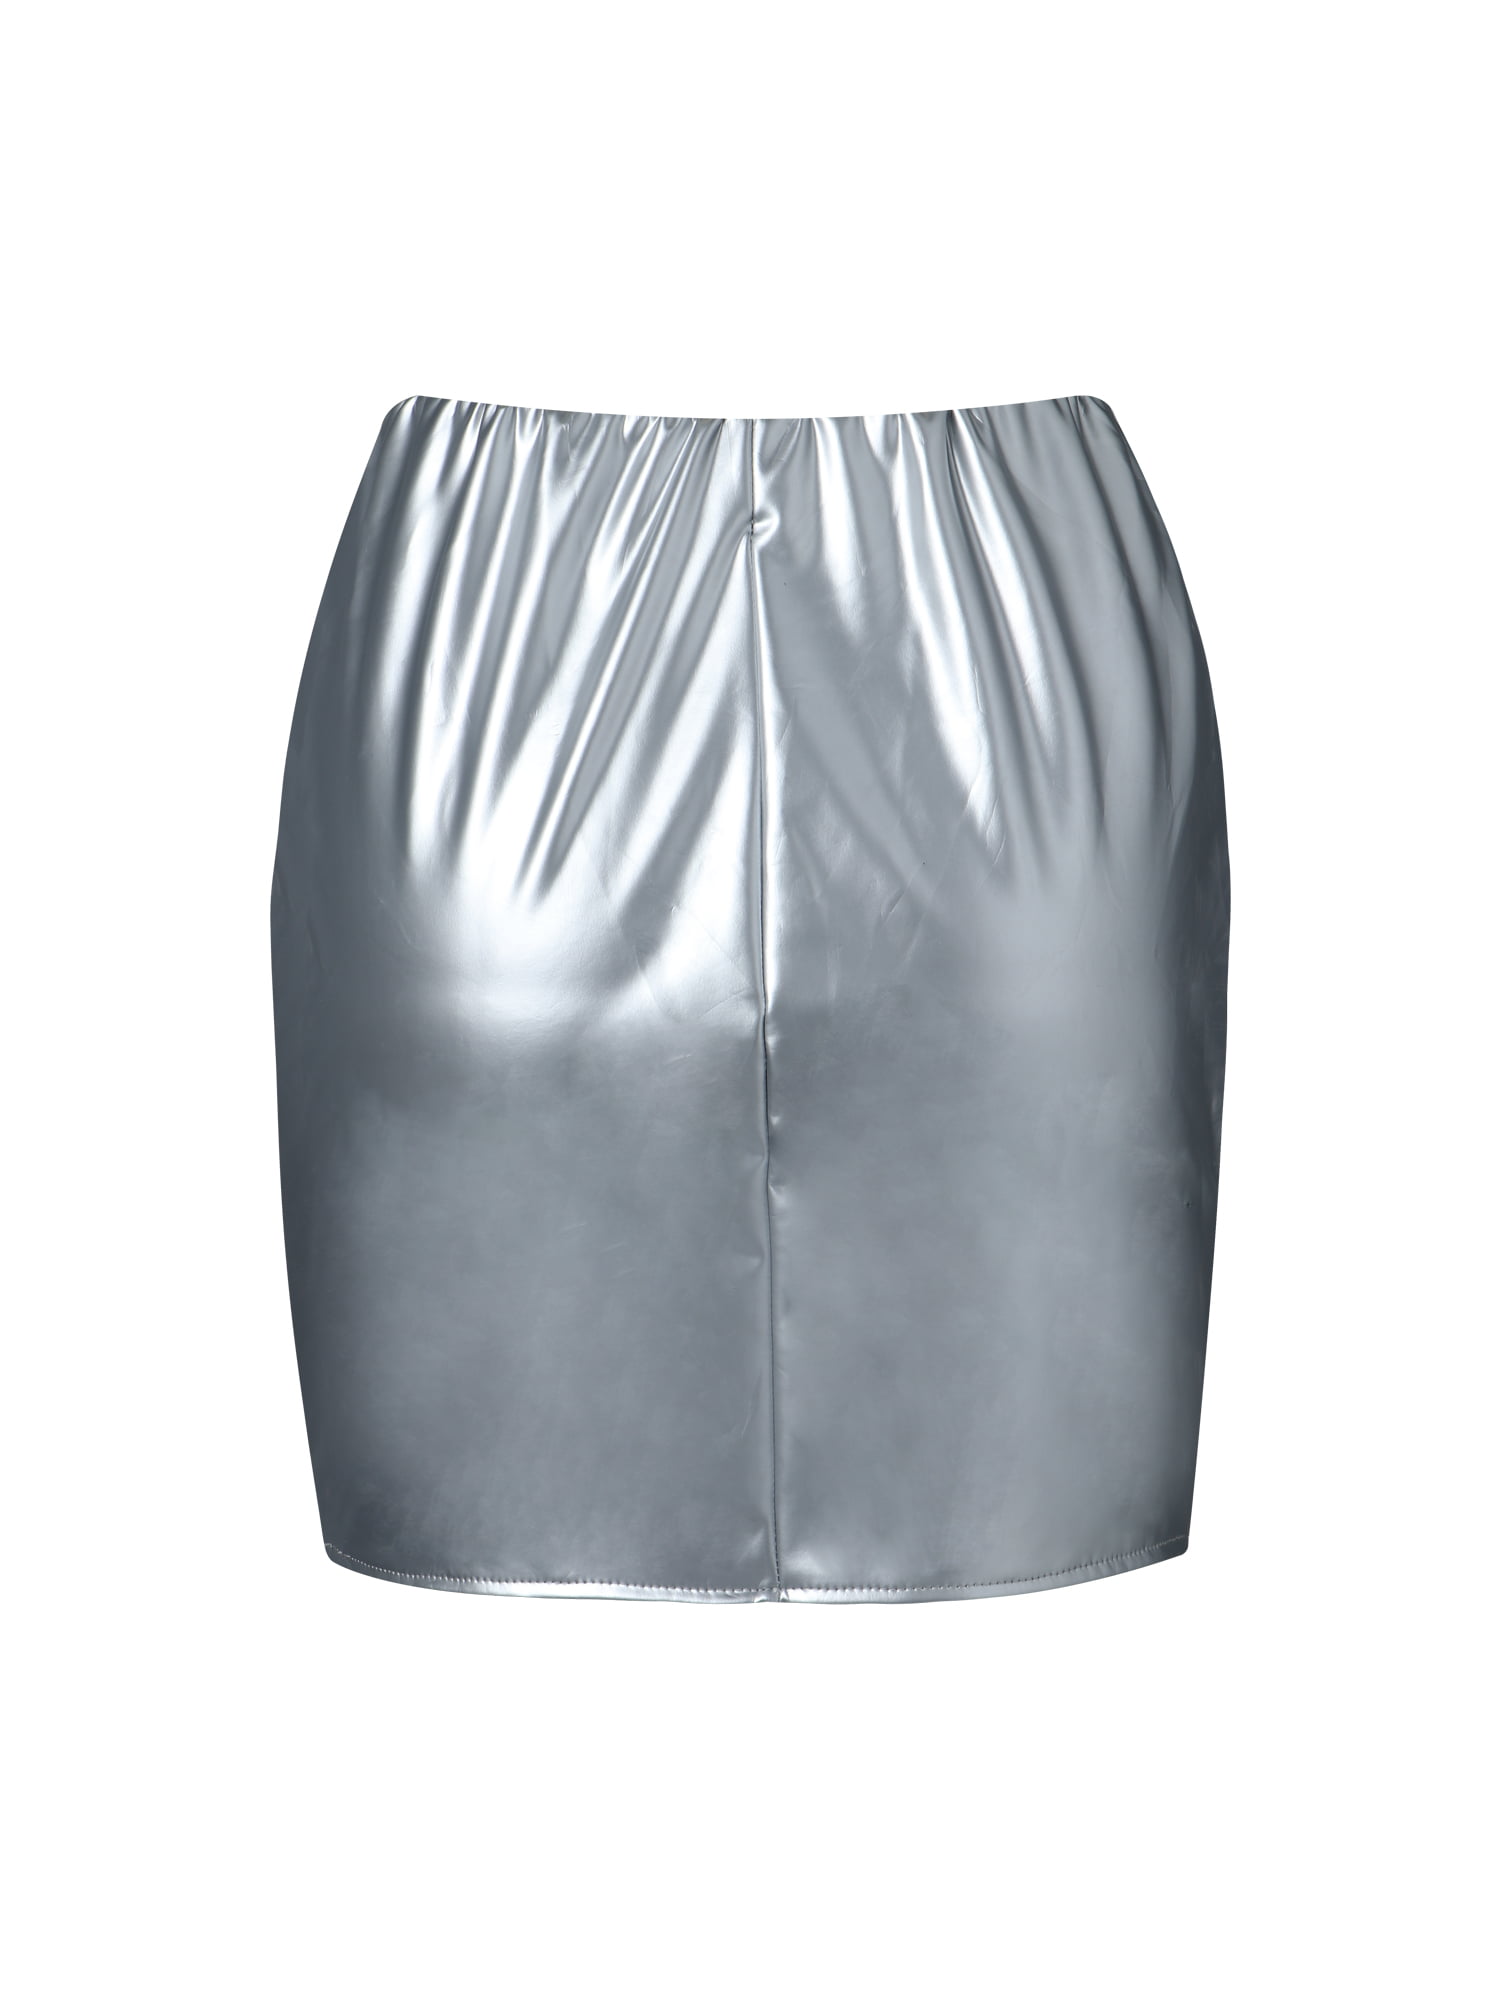 WOMEN FASHION Skirts Formal skirt Pencil Bershka formal skirt discount 62% Black/Silver L 